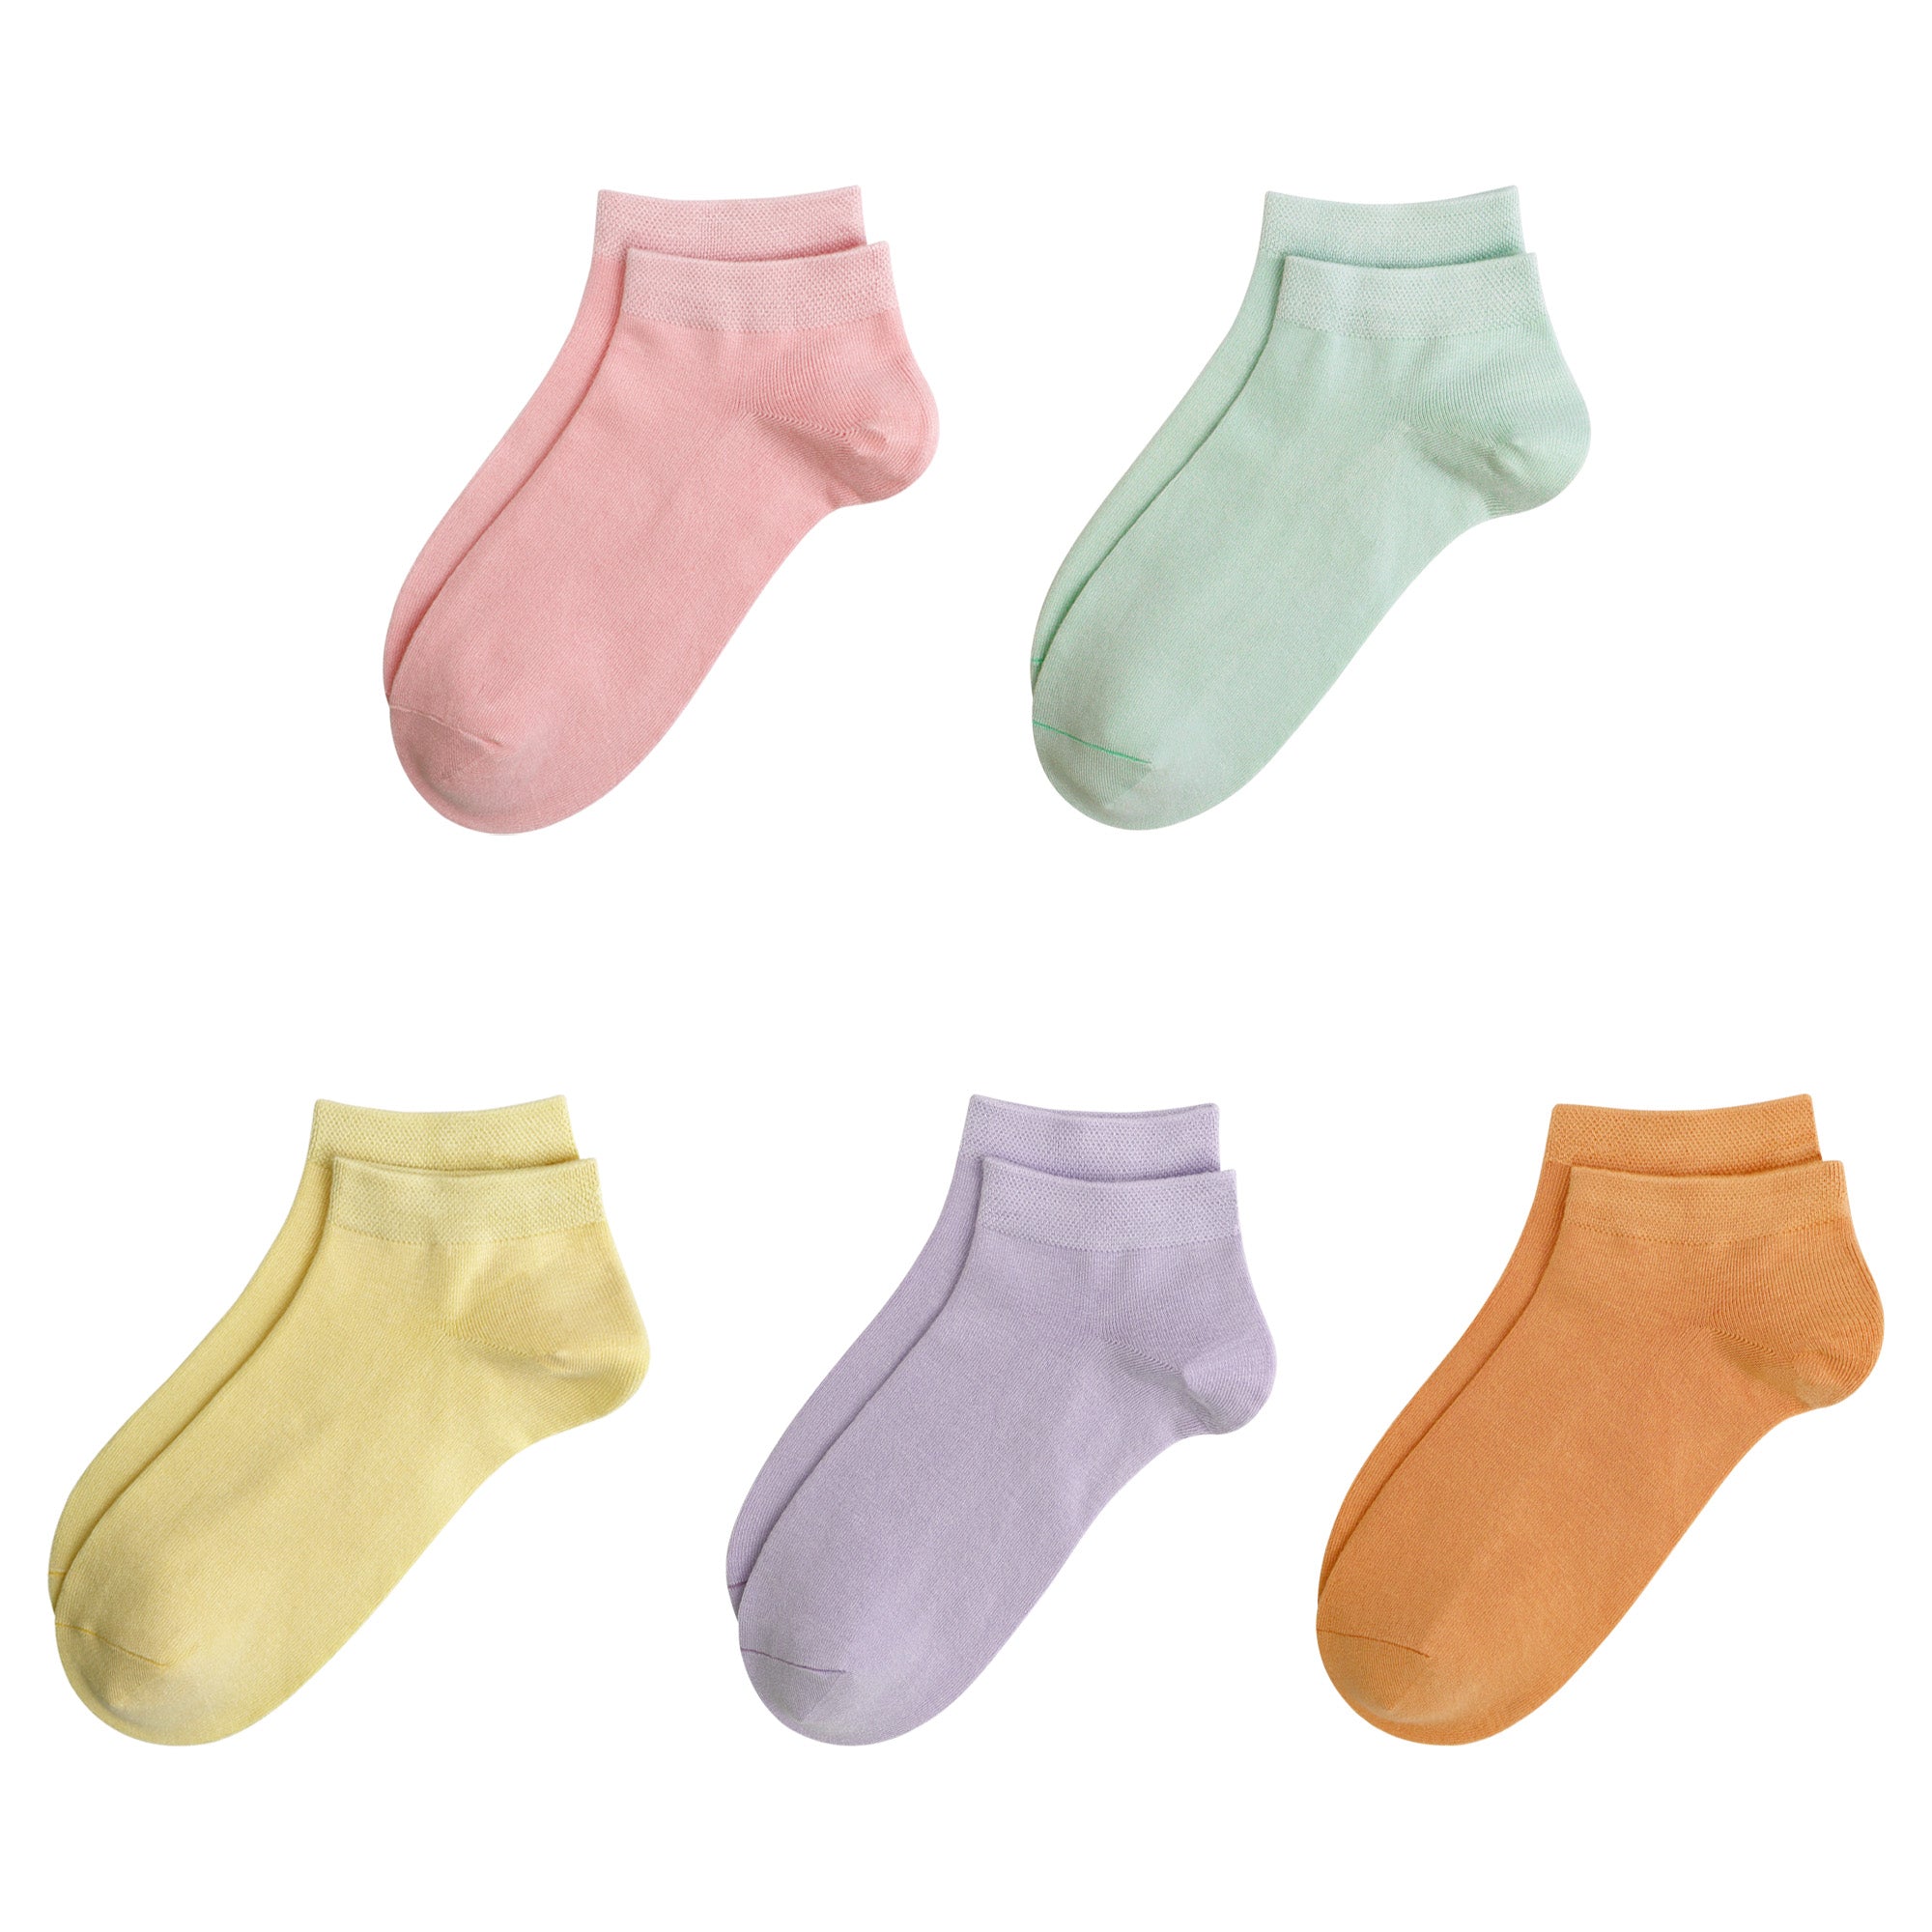 Bamboo School Socks Ankle Super Soft School Kids Socks Stretch Cuffs Athletic Socks Odor Resistant Anti-odor 5 Pairs